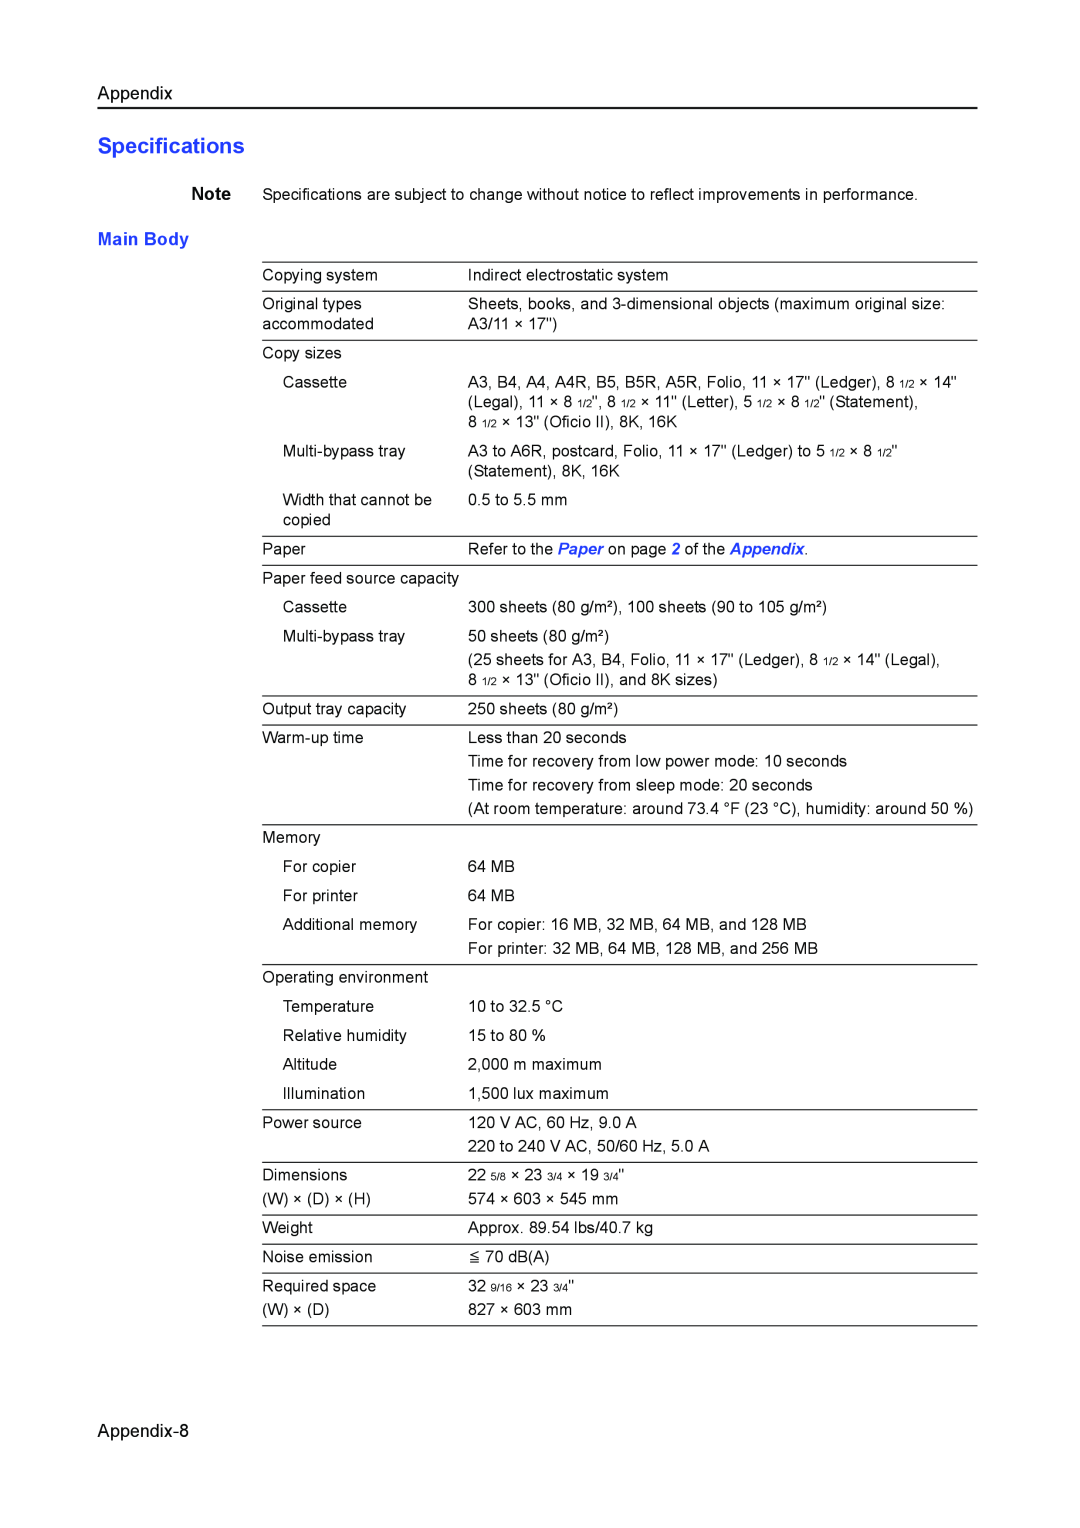 Kyocera 2050, 1650, 2550 manual Specifications, Main Body, Appendix-8 